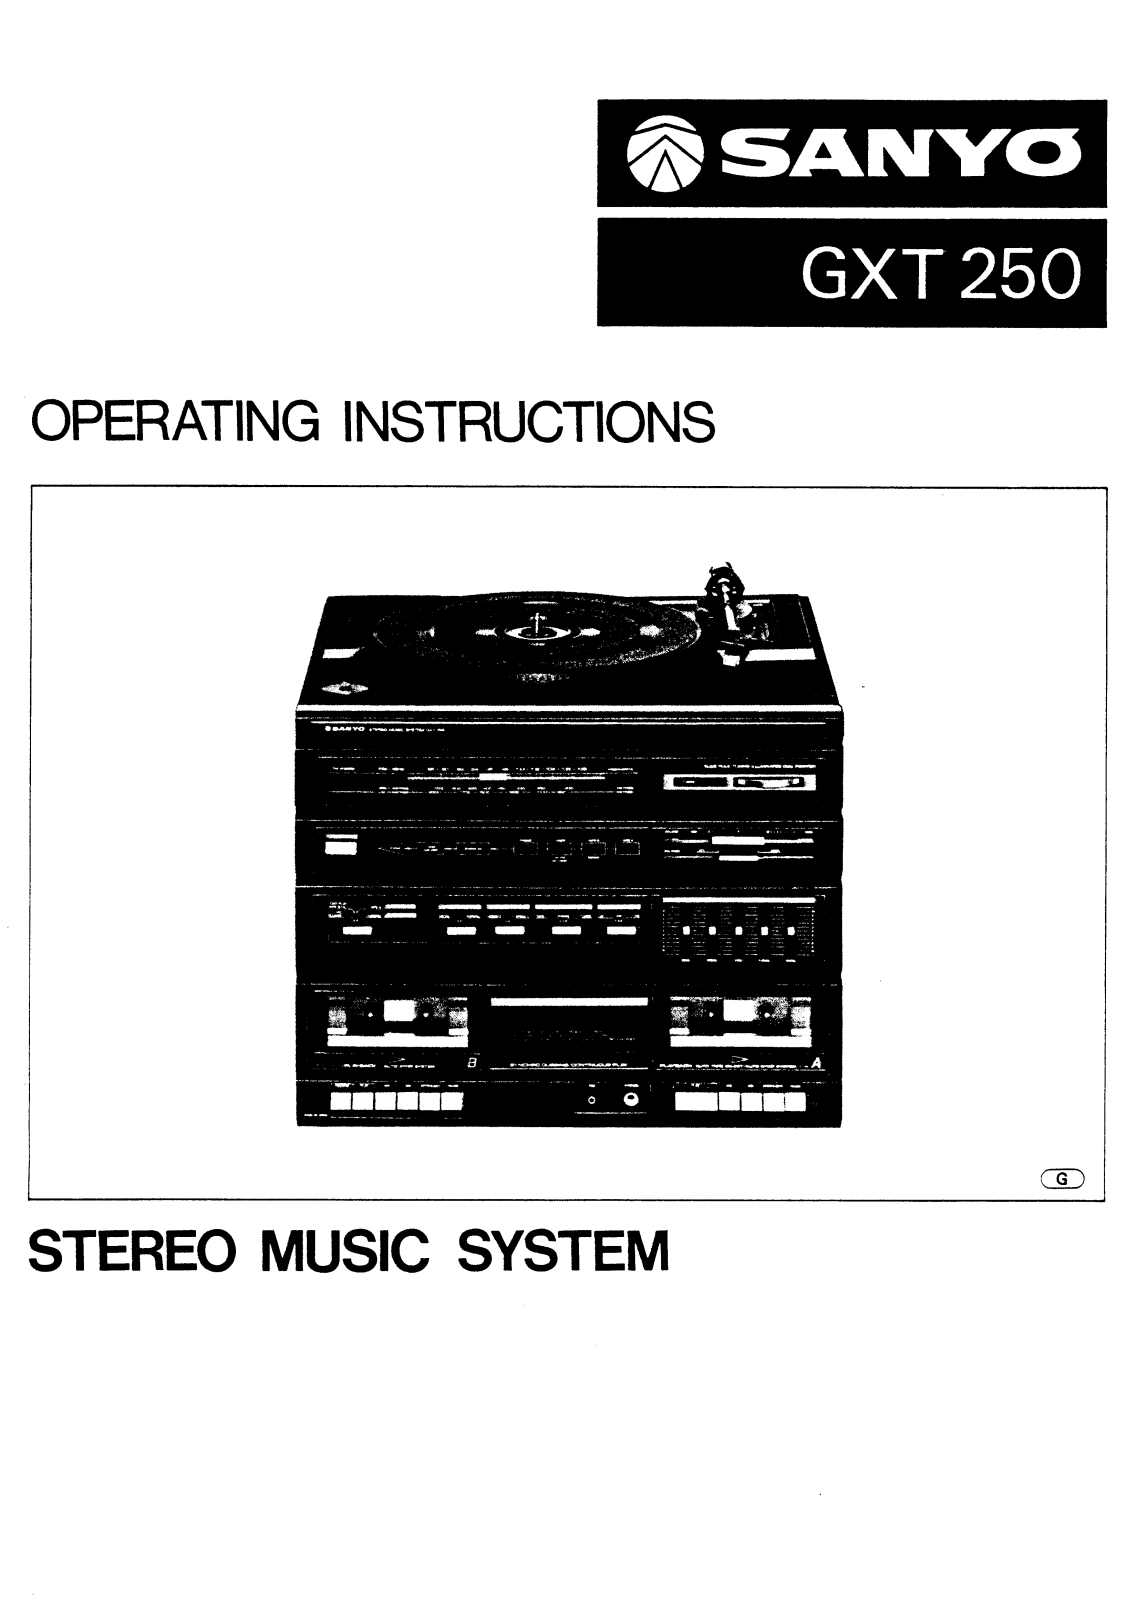 Sanyo GXT 250 Instruction Manual